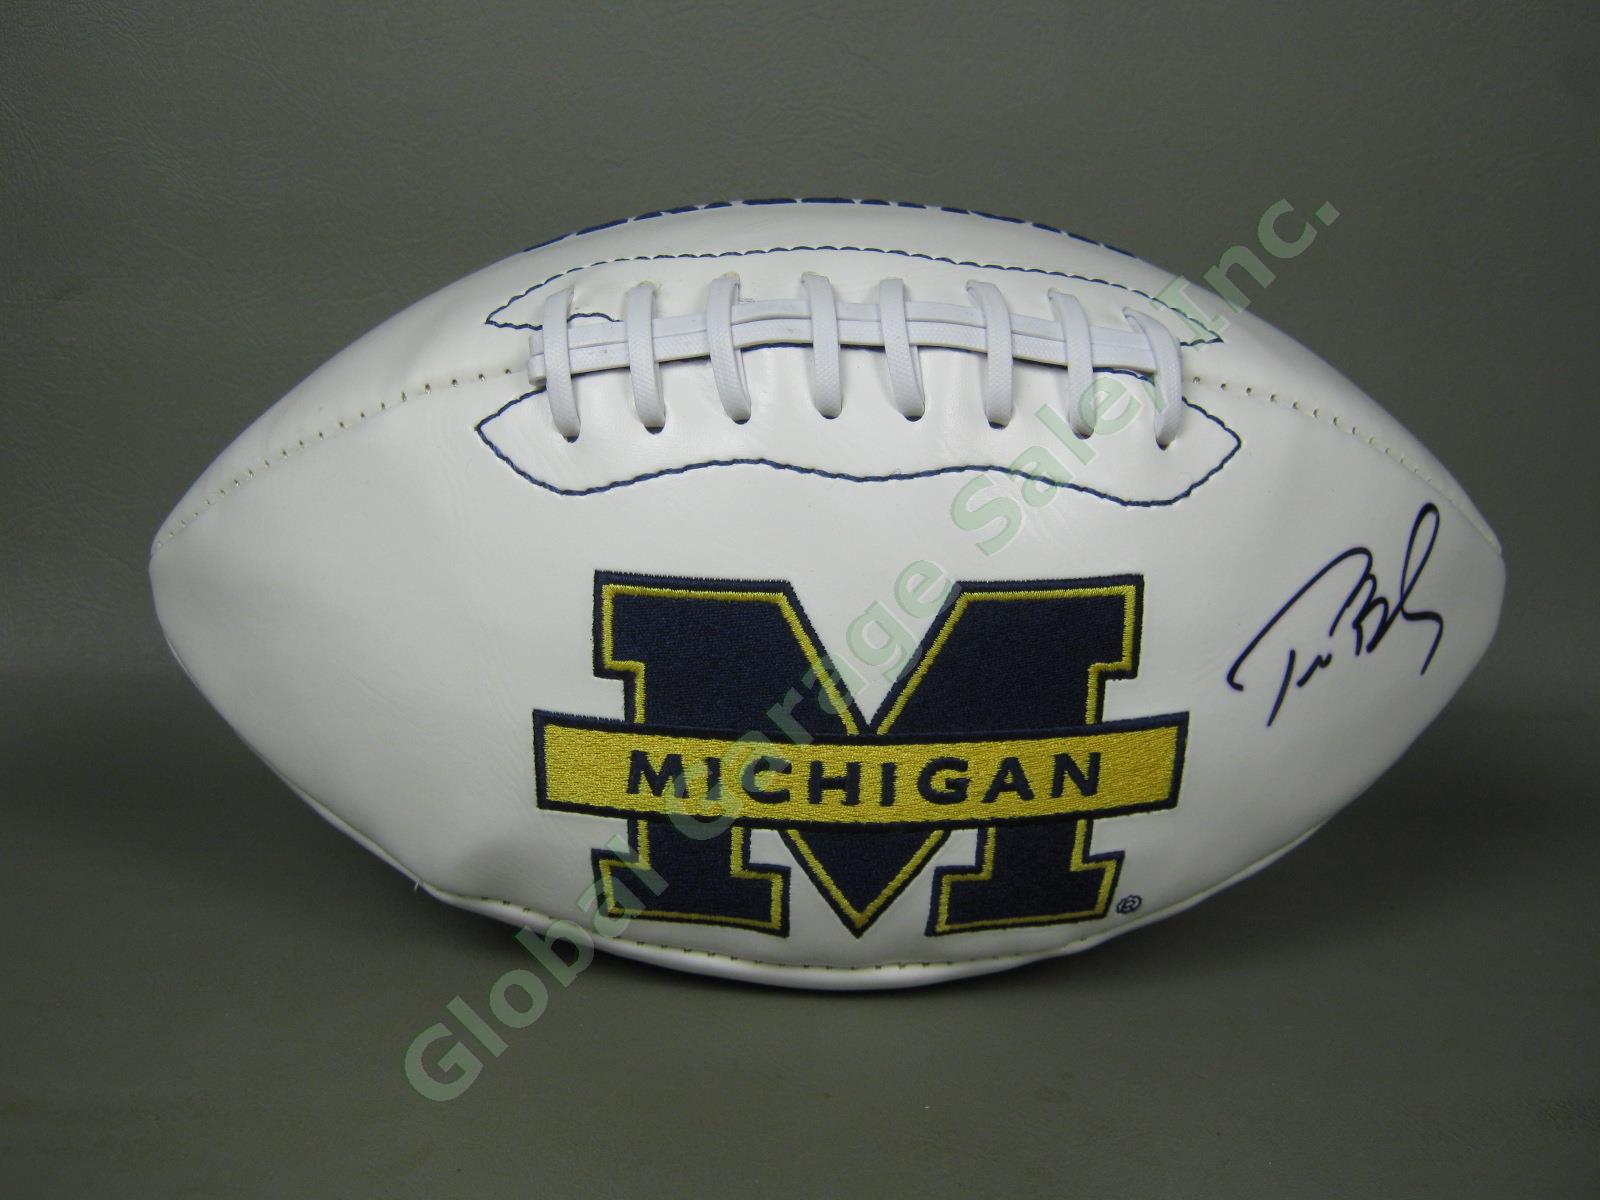 Tom Brady Hand Signed Michigan Wolverines Full Size Football NE Patriots NO RES!